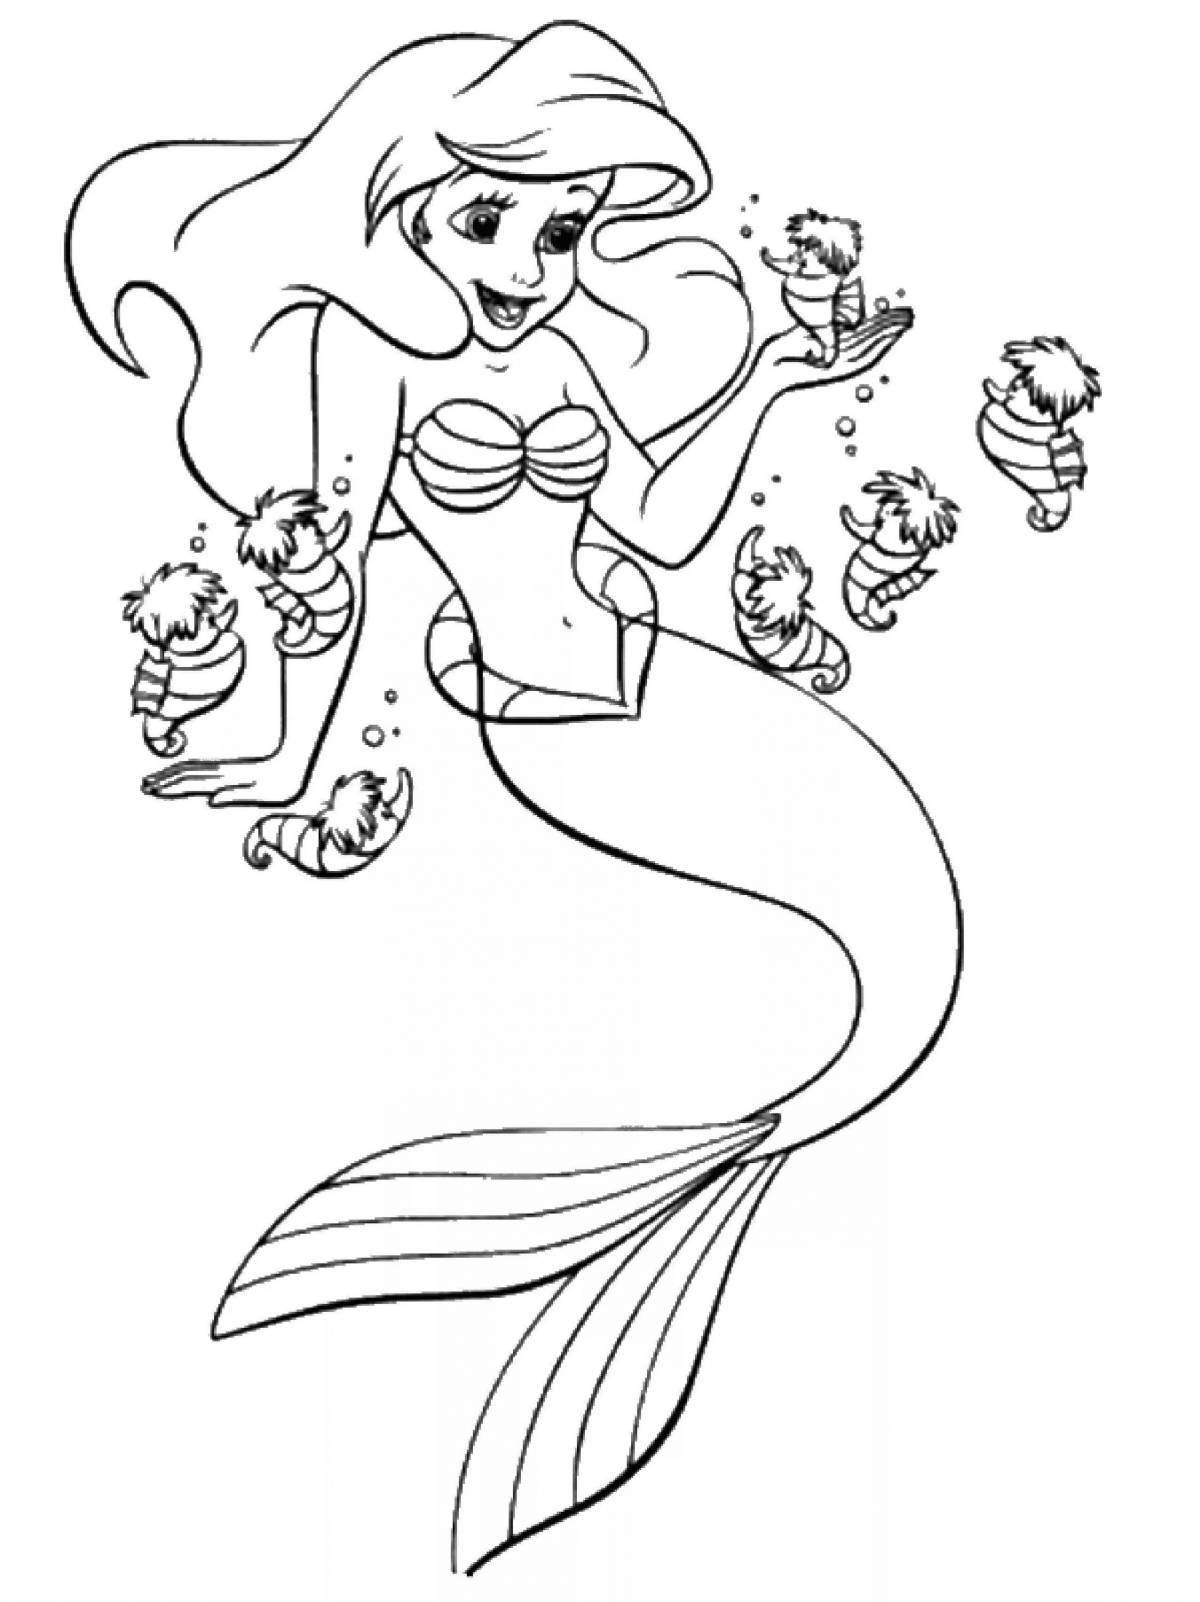 Glorious little mermaid coloring book